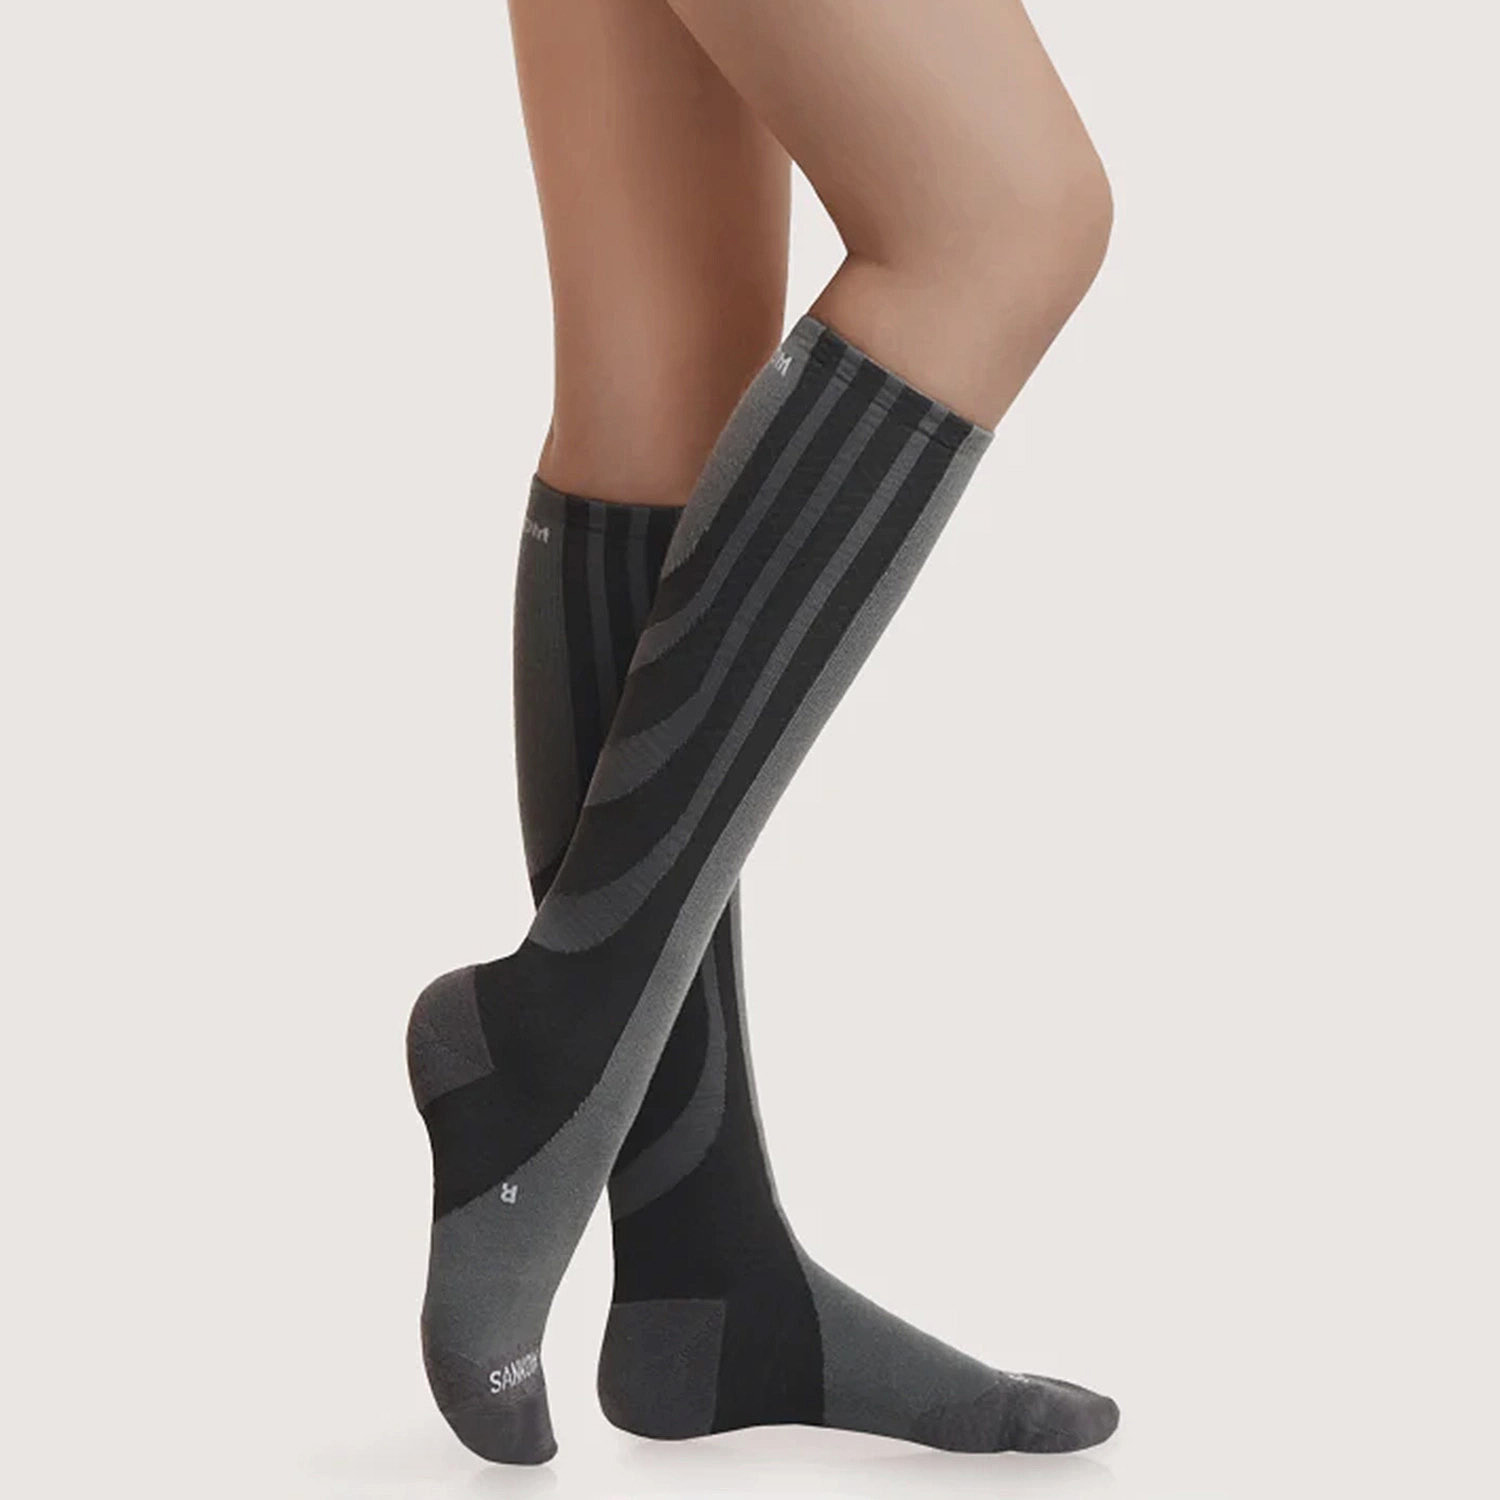 SANKOM Patent New Light Socks (Size S) - Grey